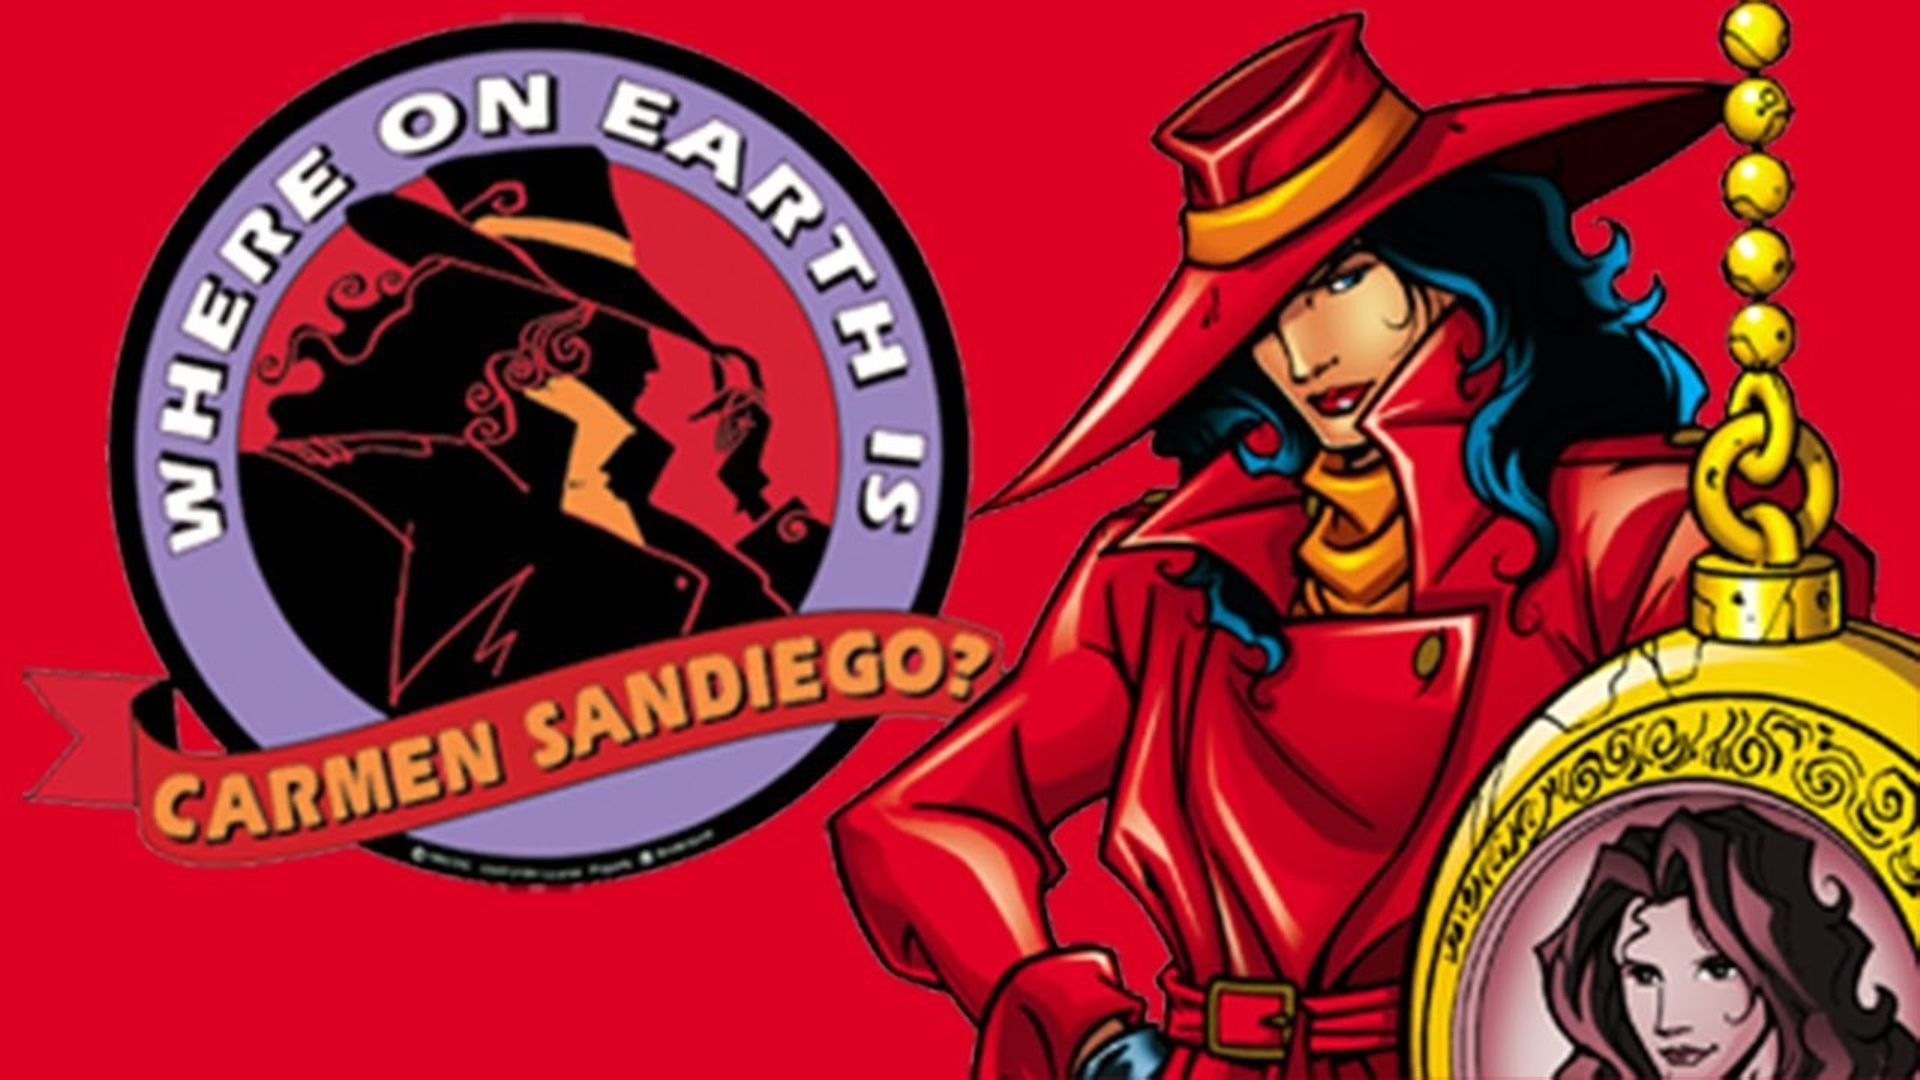 Stream Where in the World is Carmen Sandiego? by BuddyBoy600alt